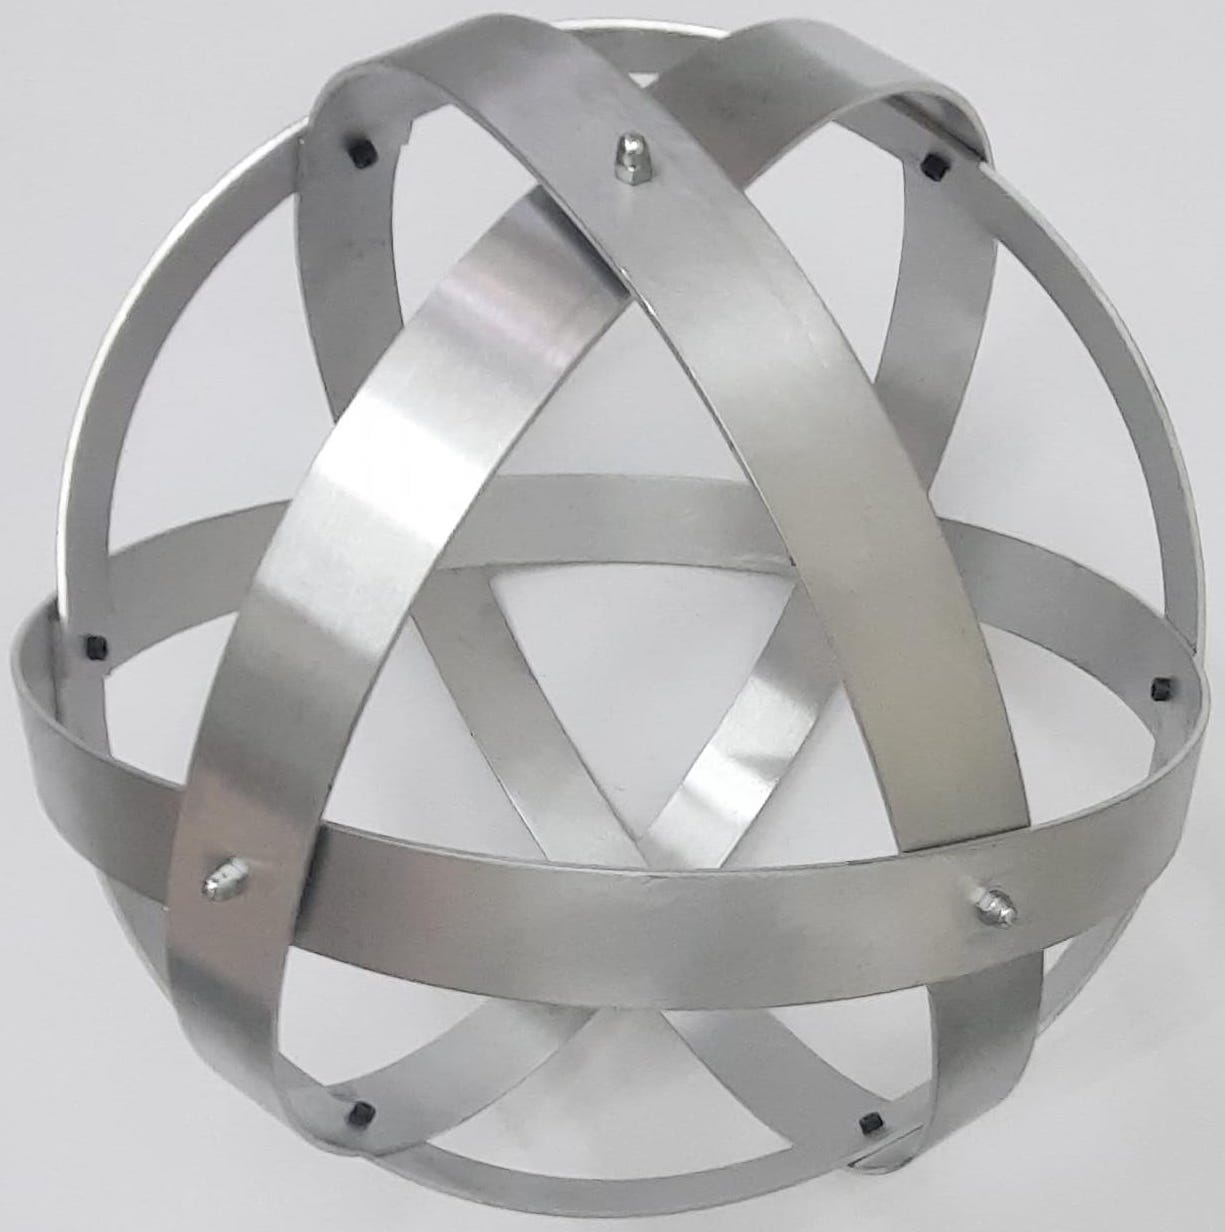 Genesa Crystal in Alluminio Naturale Lucidato, 25cm diametro con